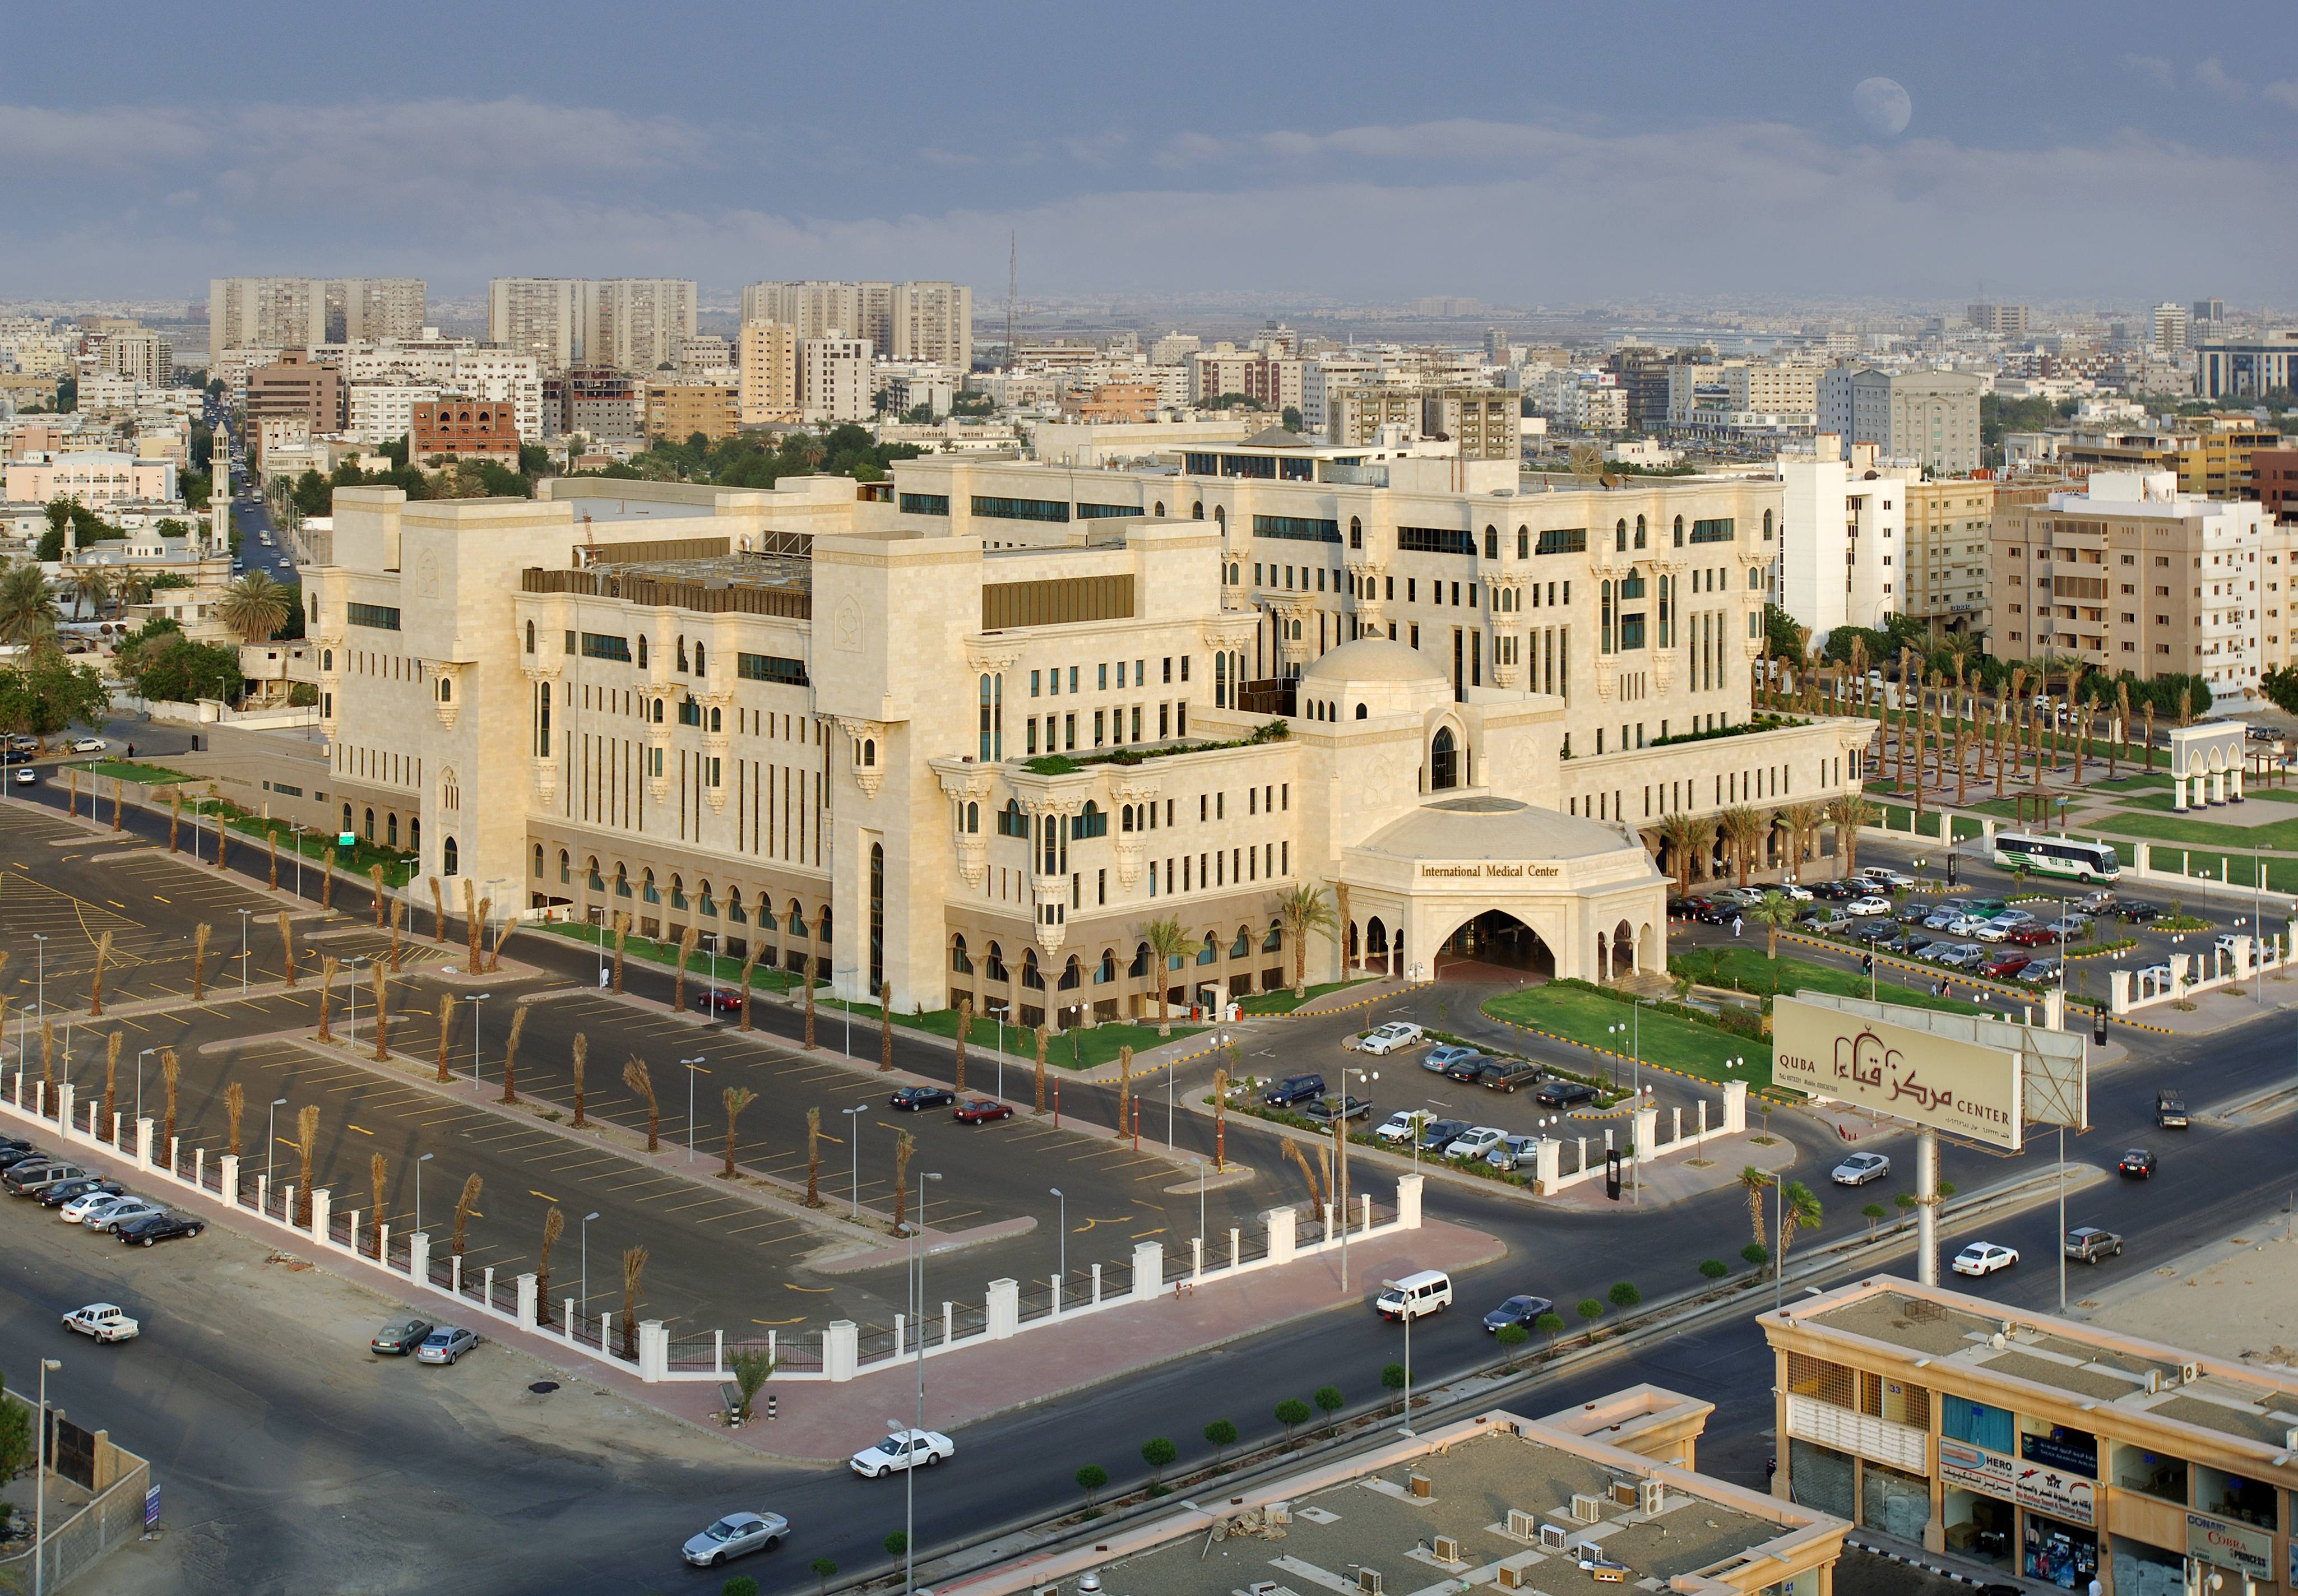 International Medical Center in Saudi Arabia